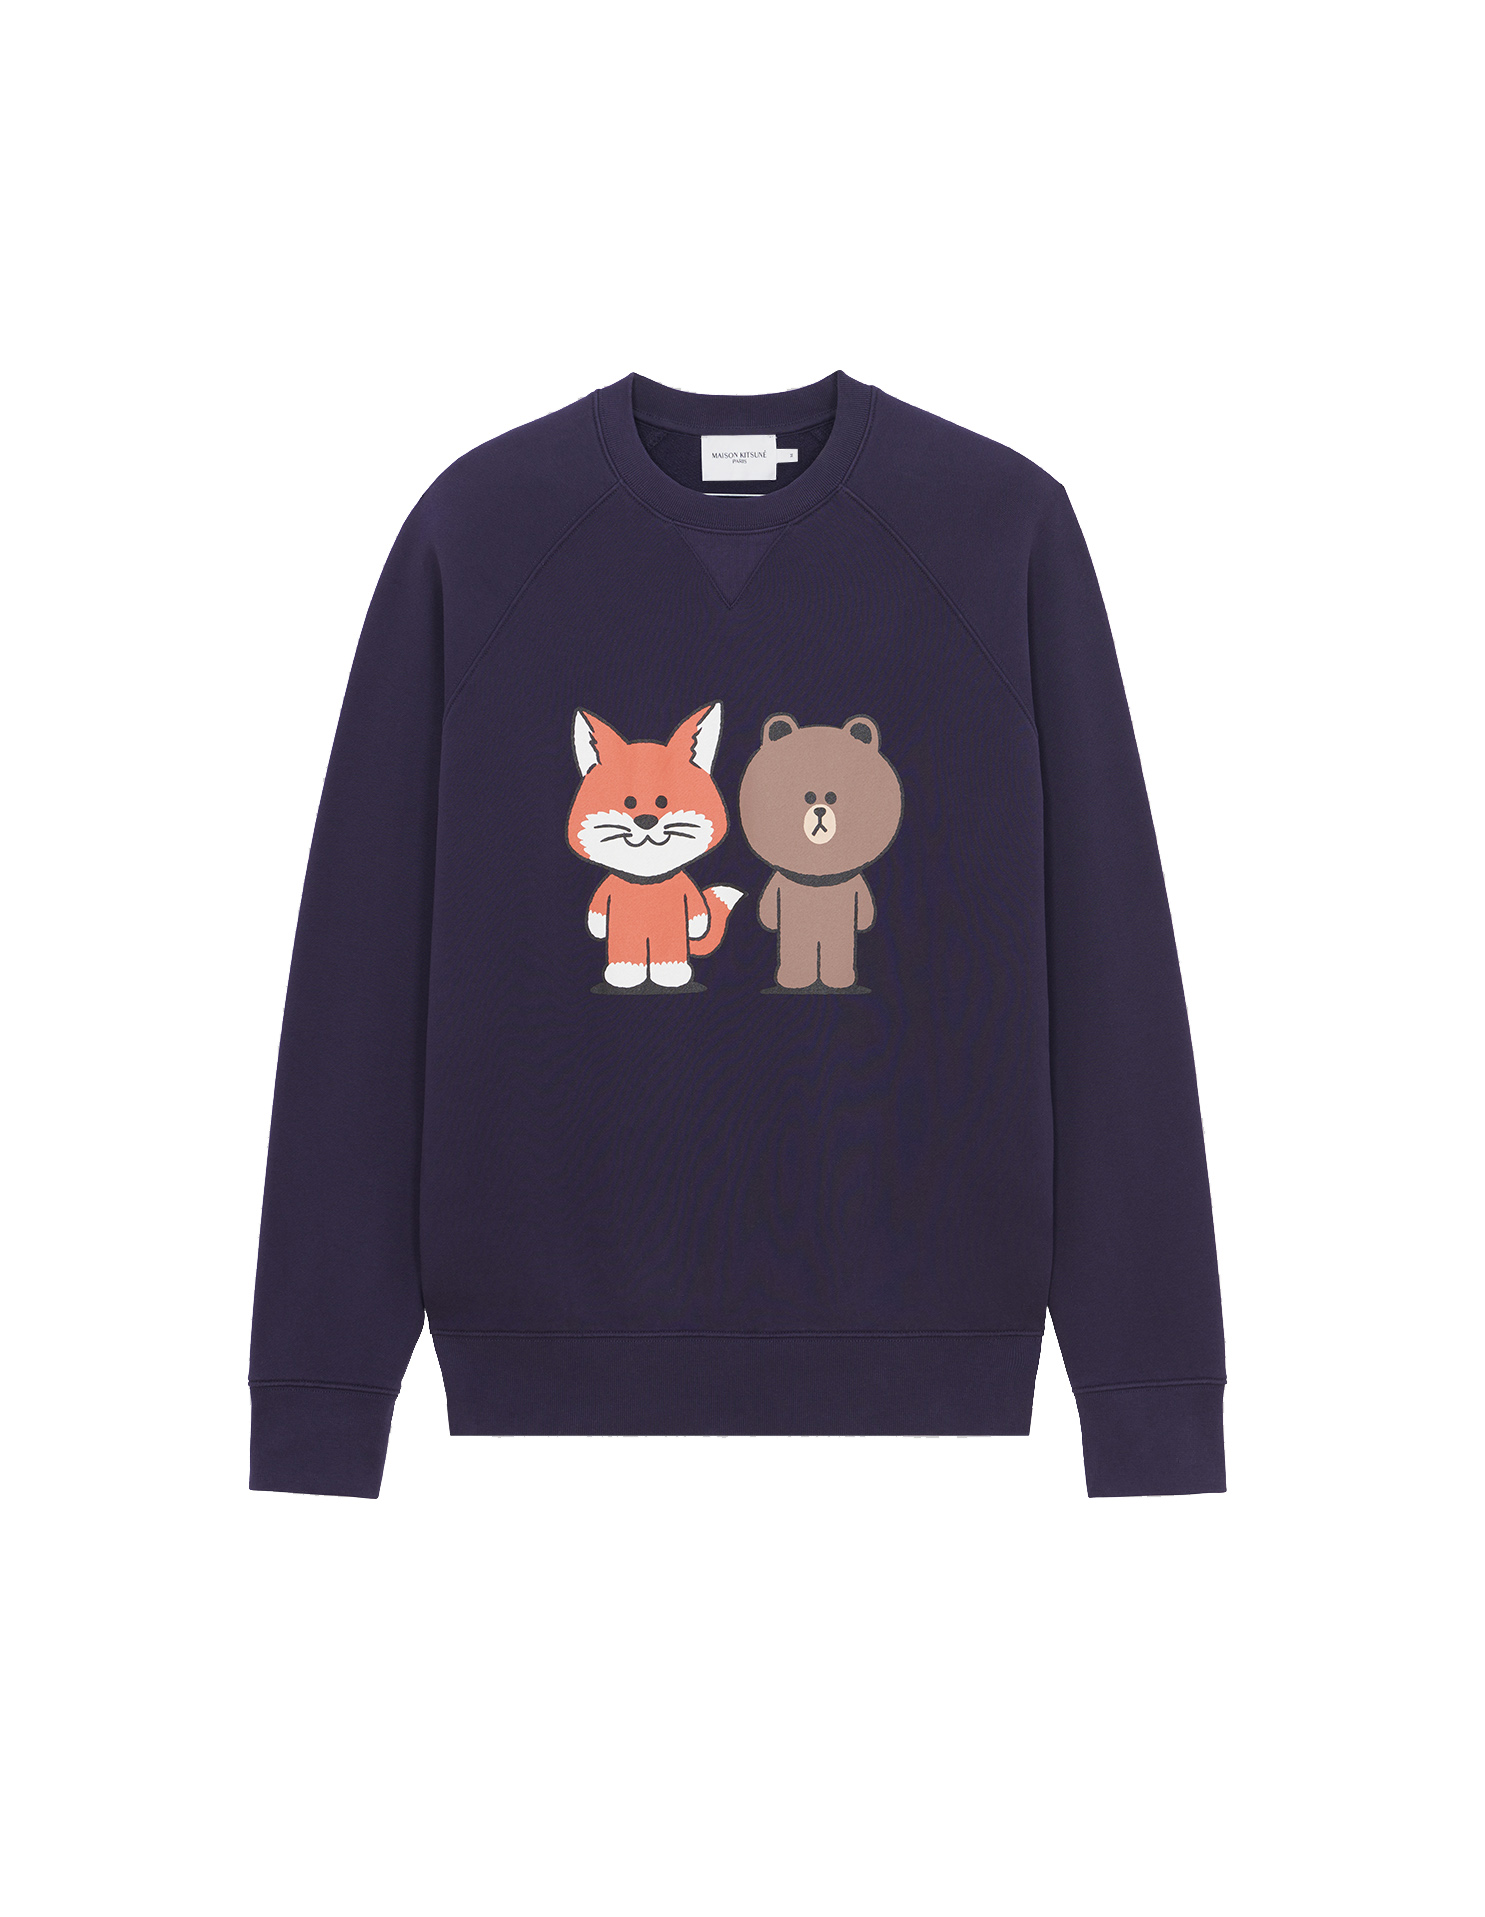 Maison Kitsune x Line Big Print Sweatshirt Navy メンズ - SS21 - JP